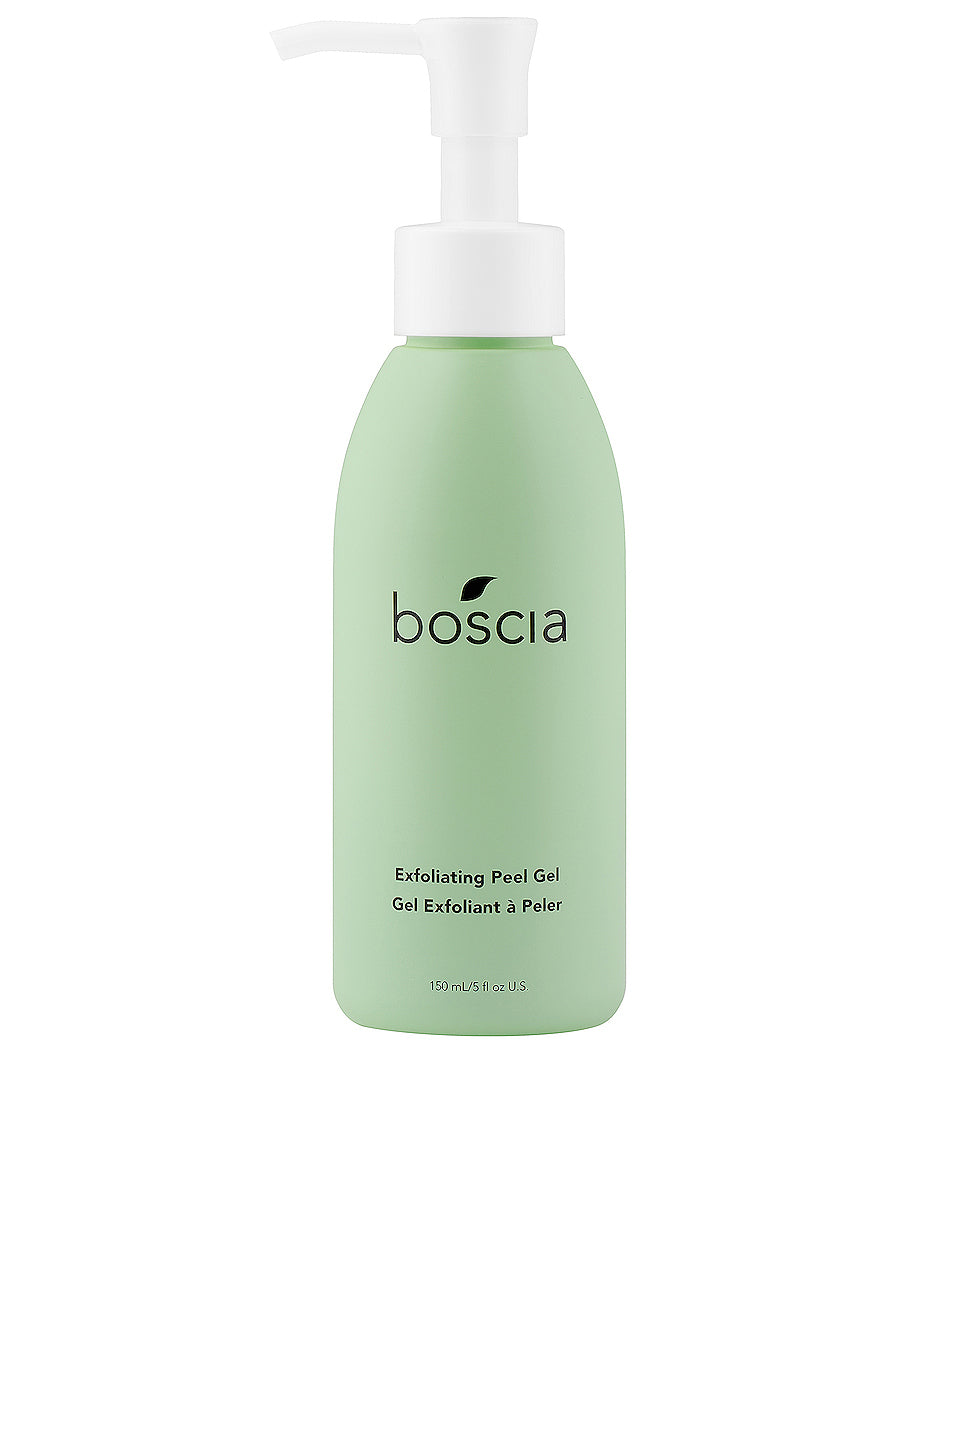 Boscia Exfoliating Gel Peel,150ml, New Products, London Loves Beauty